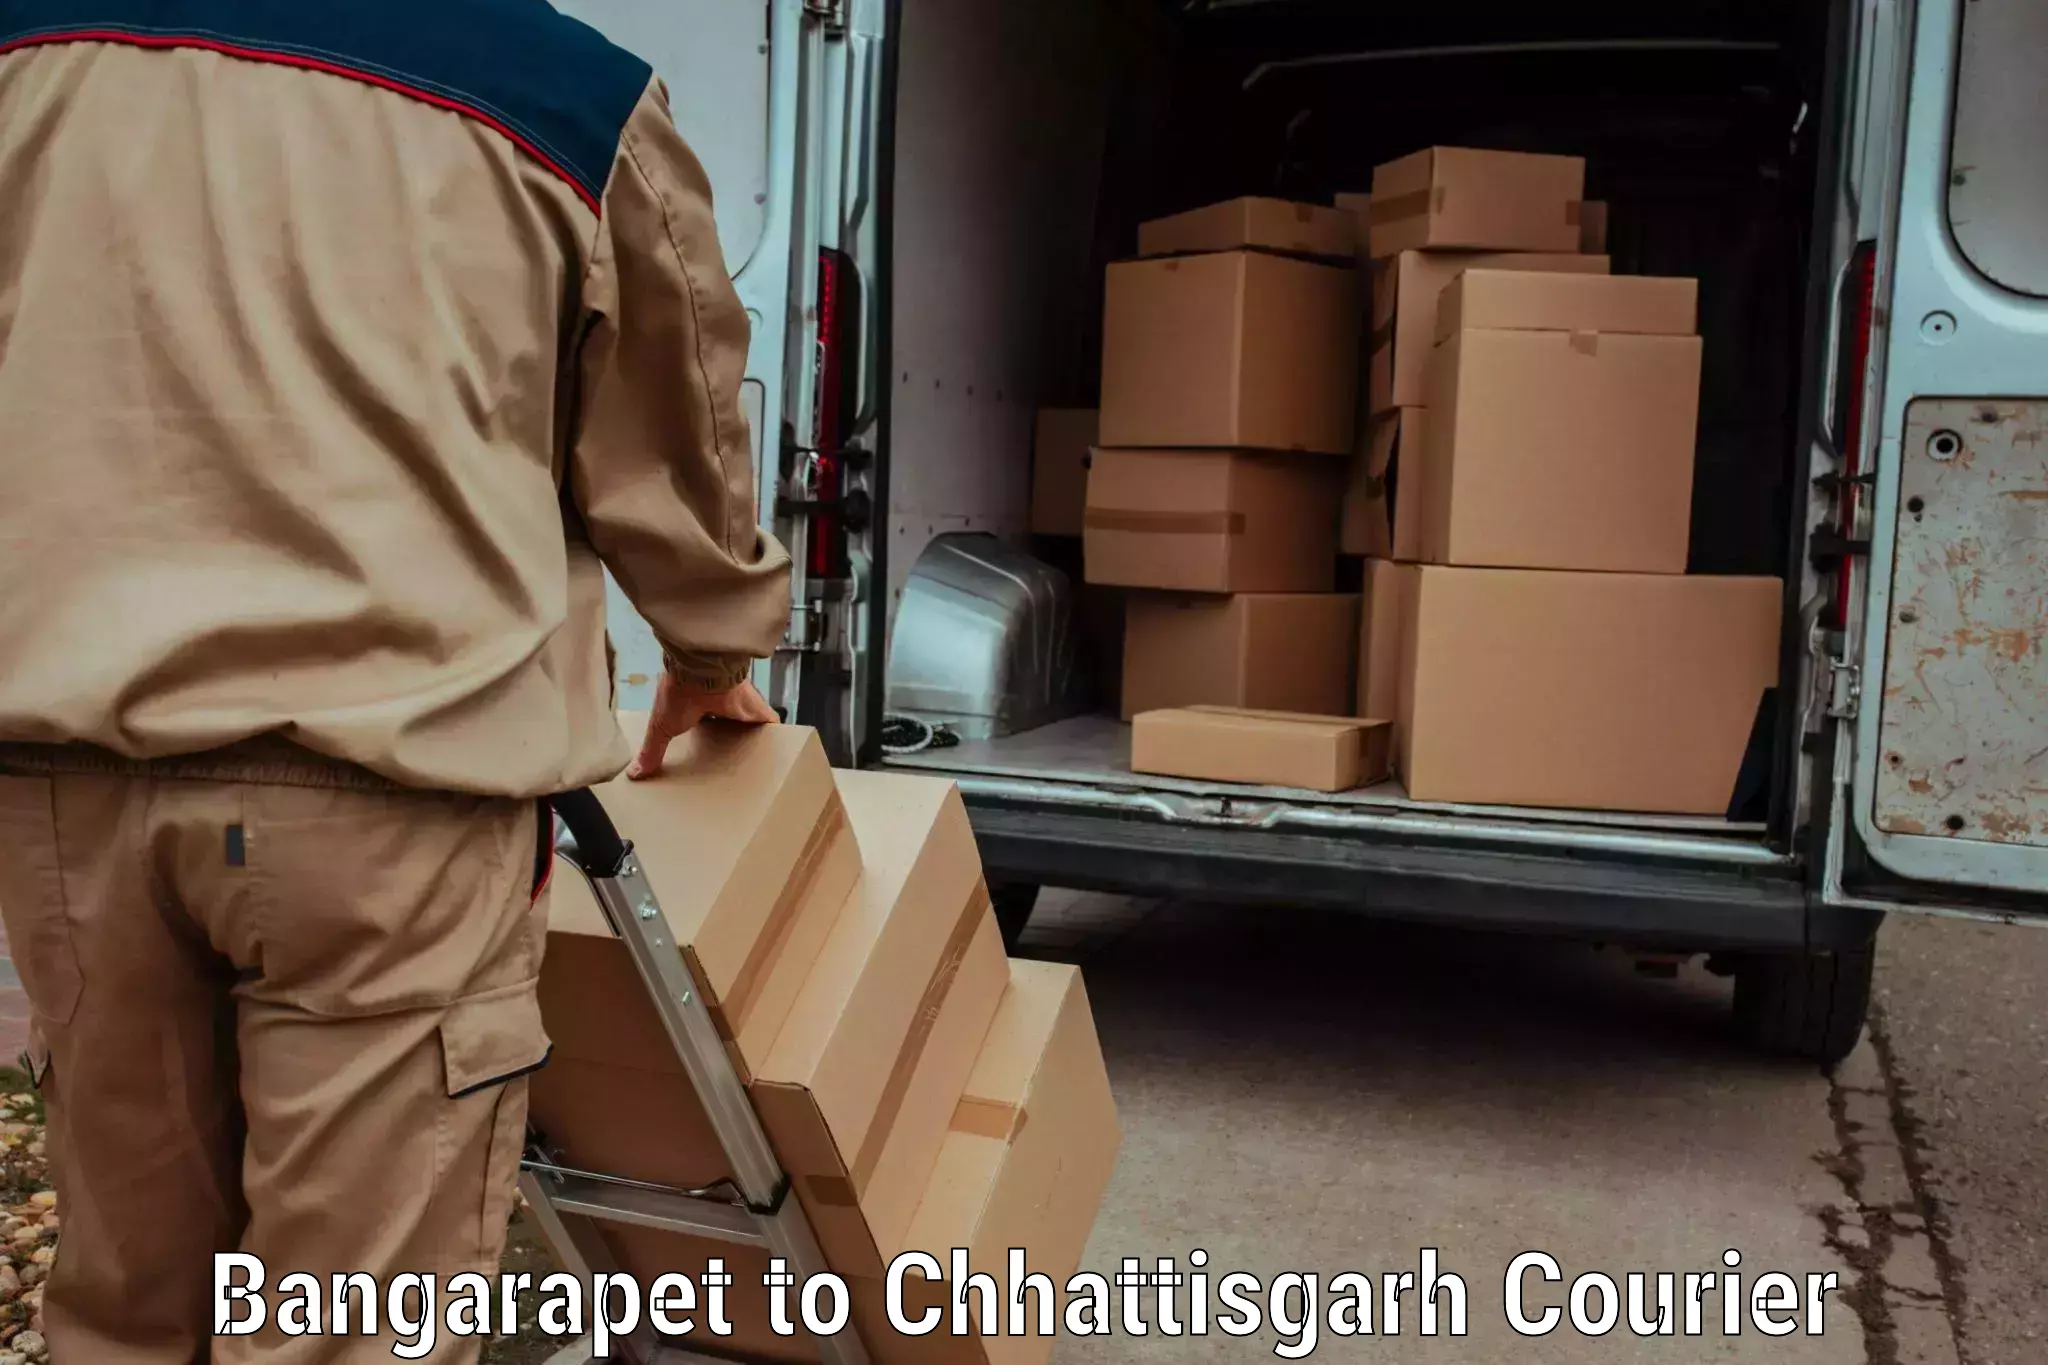 Quick dispatch service in Bangarapet to Chhattisgarh